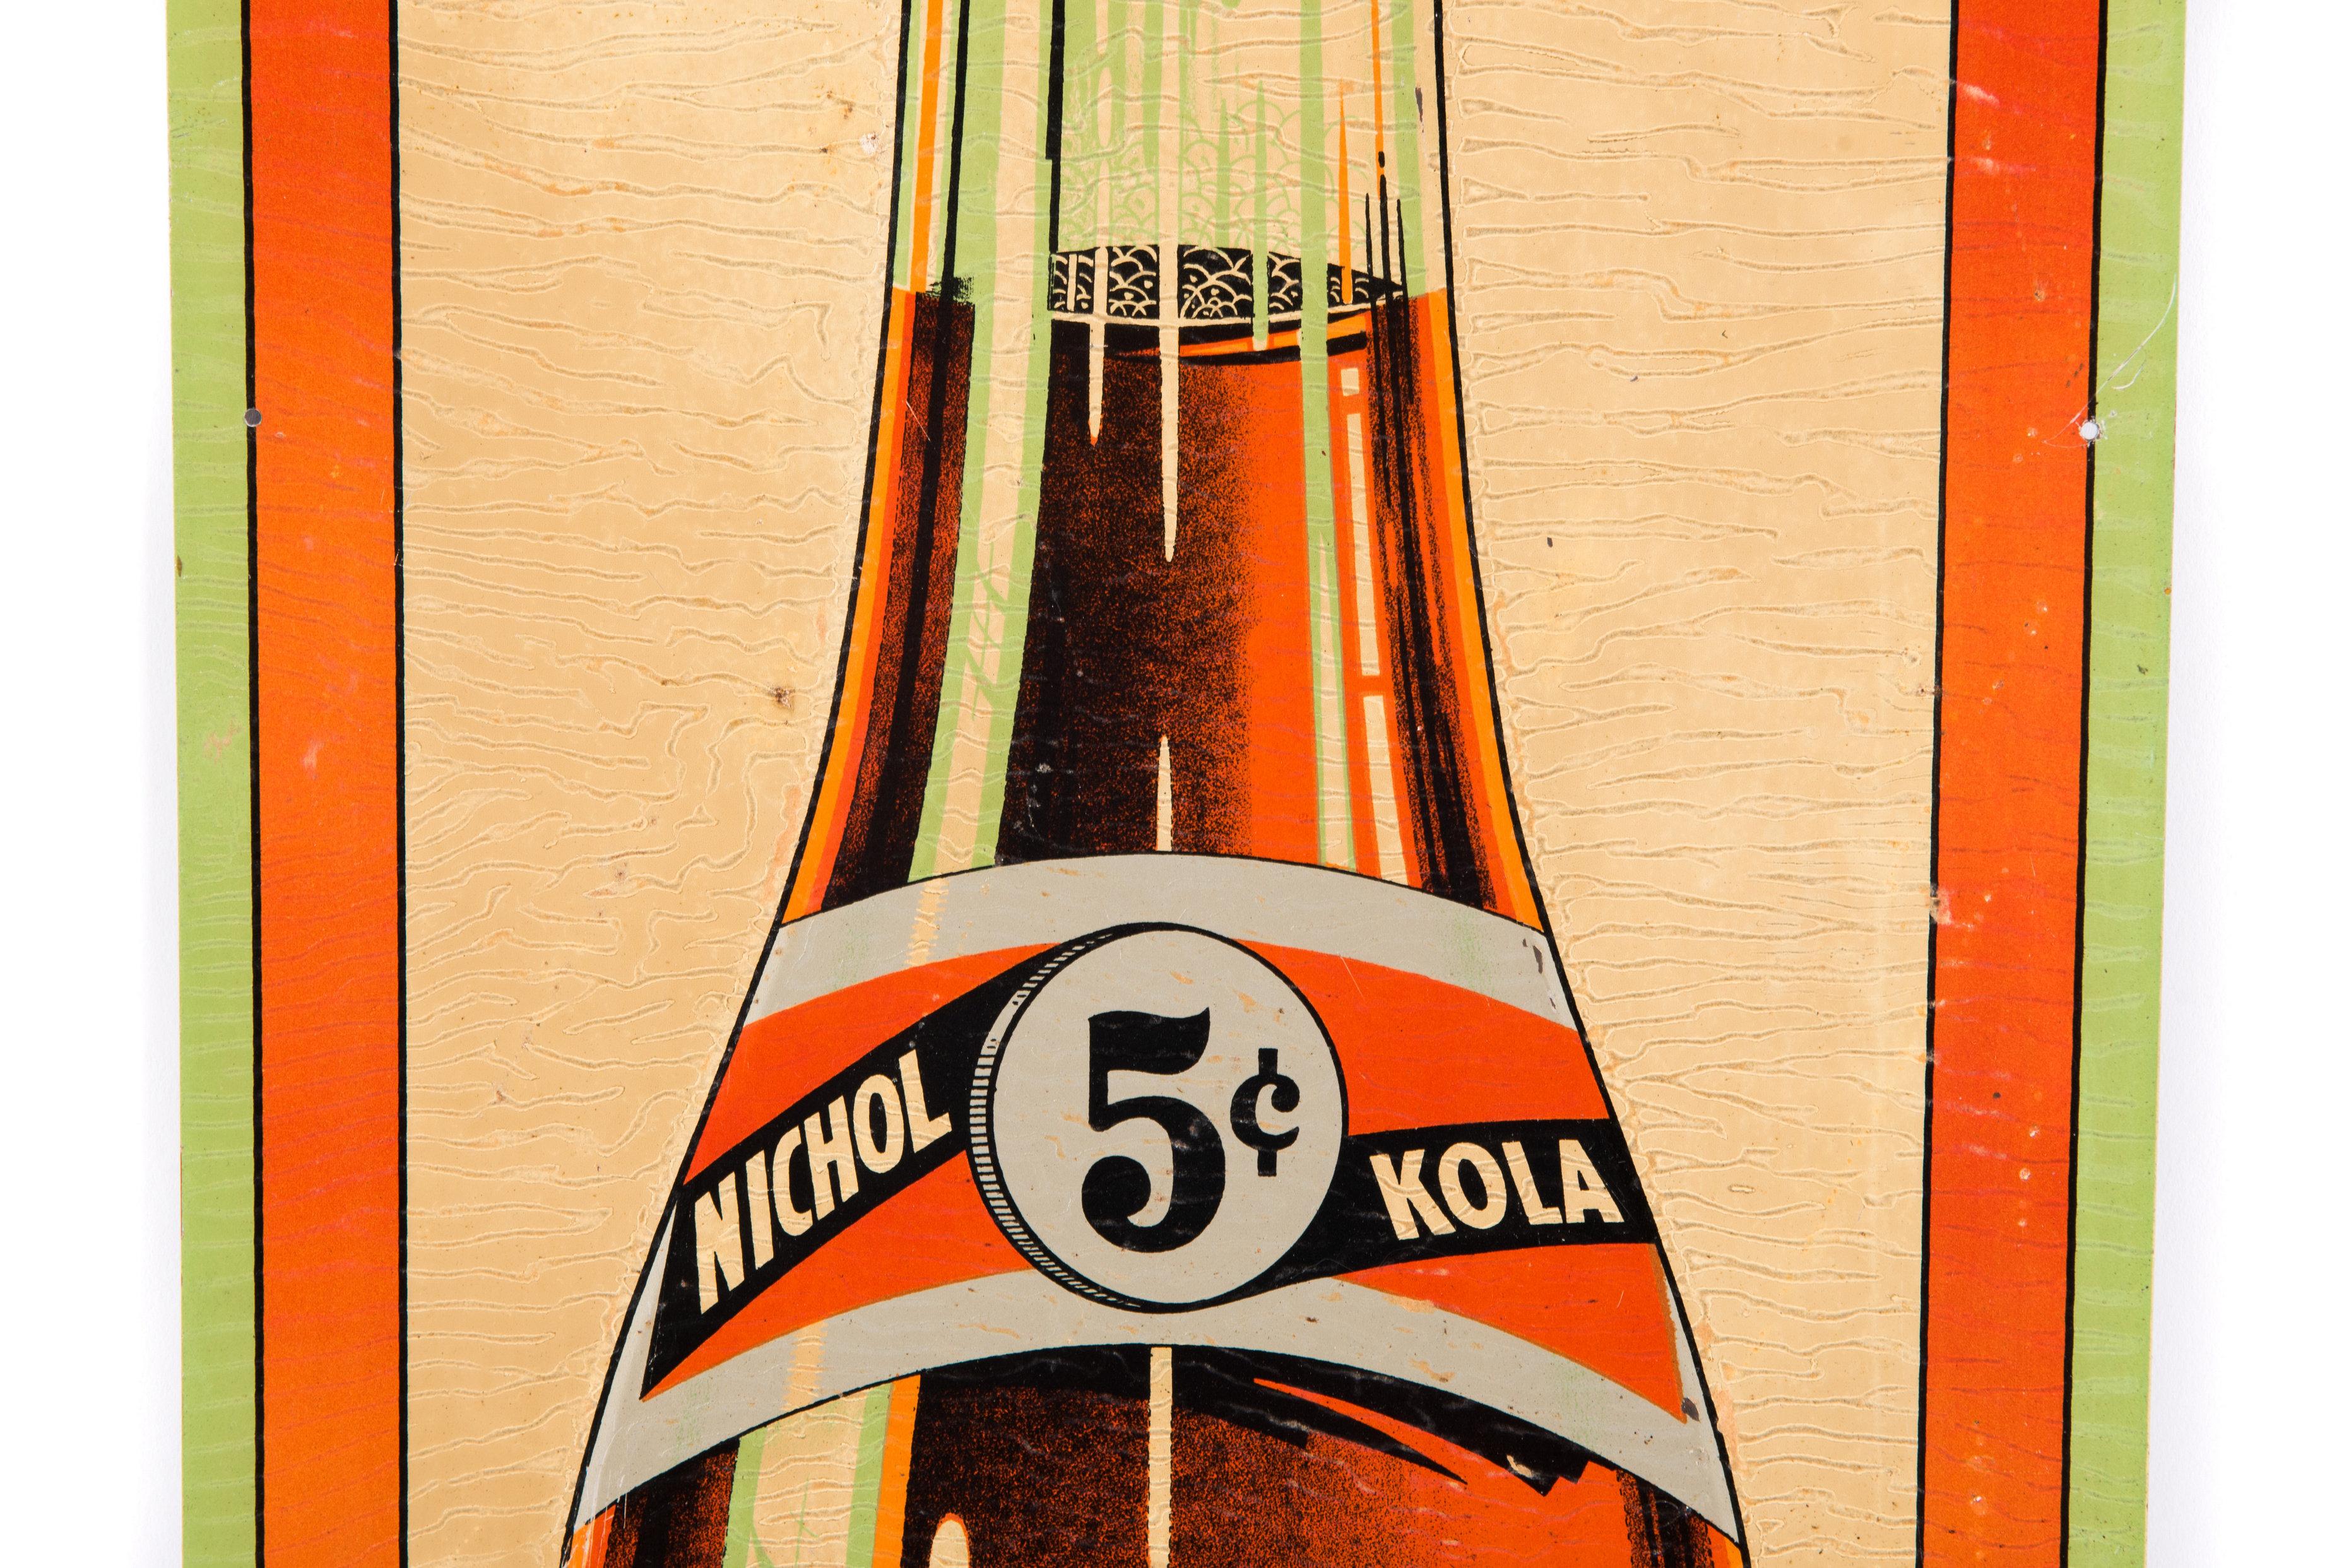 Nichol Cola Vertical Tin Sign